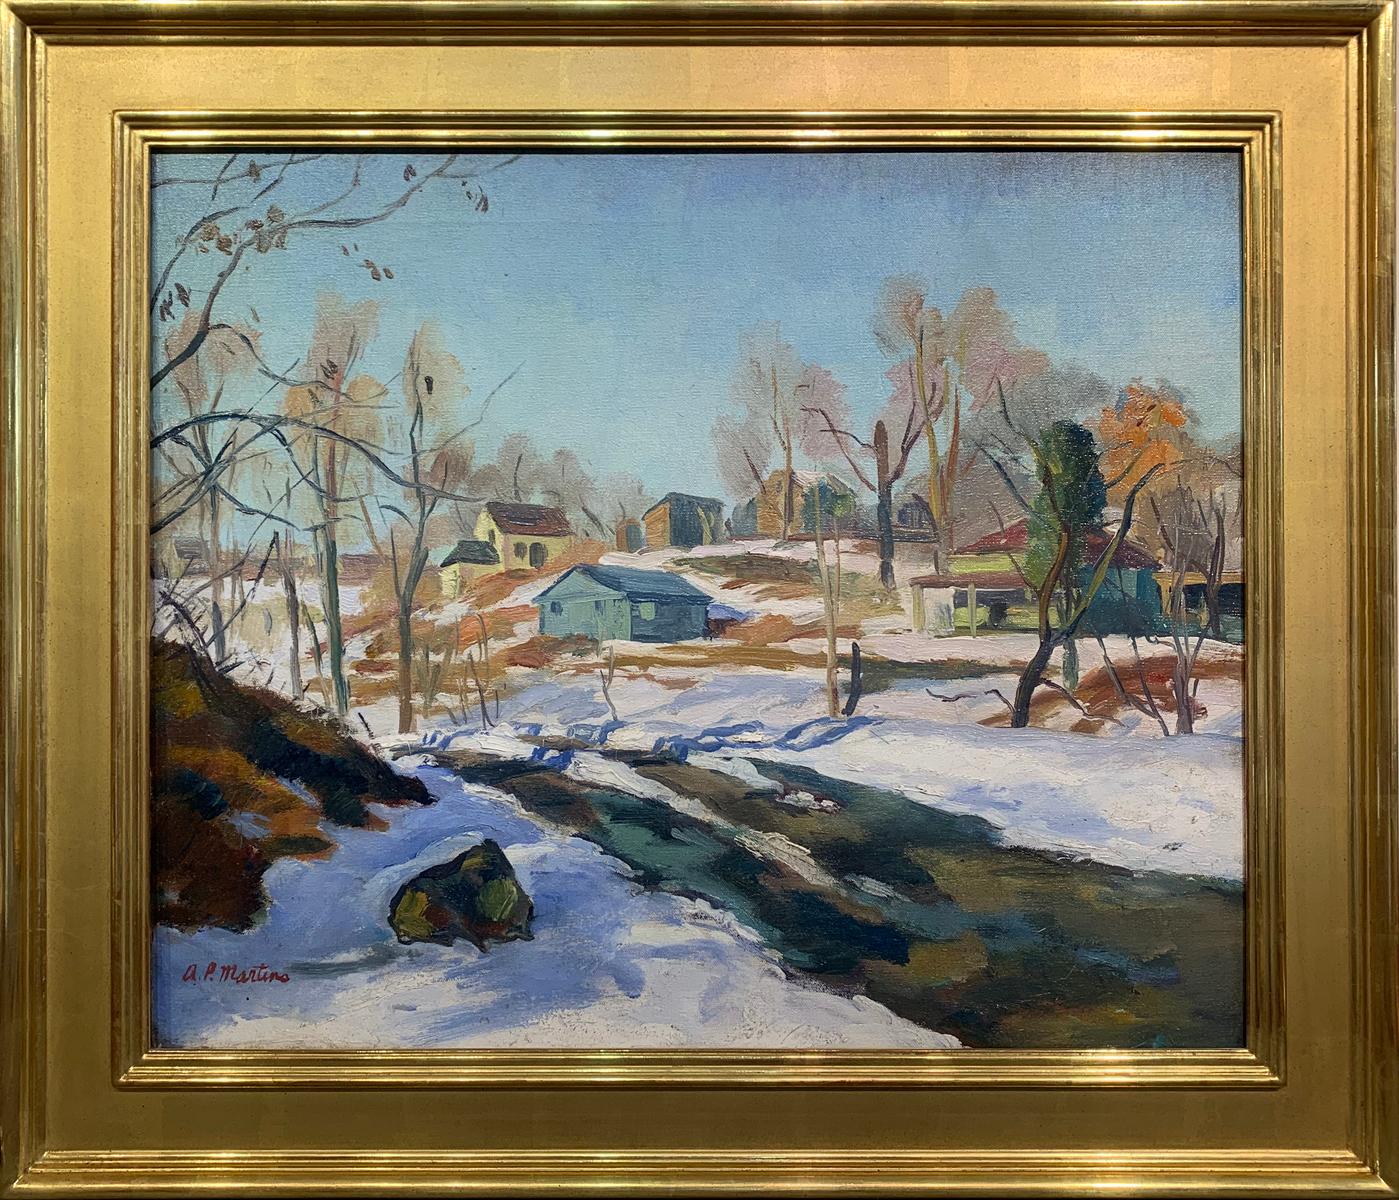 Antonio Pietro Martino Landscape Painting - Antonio Martino, Winter in New Hope, Oil on Canvas, 1940's